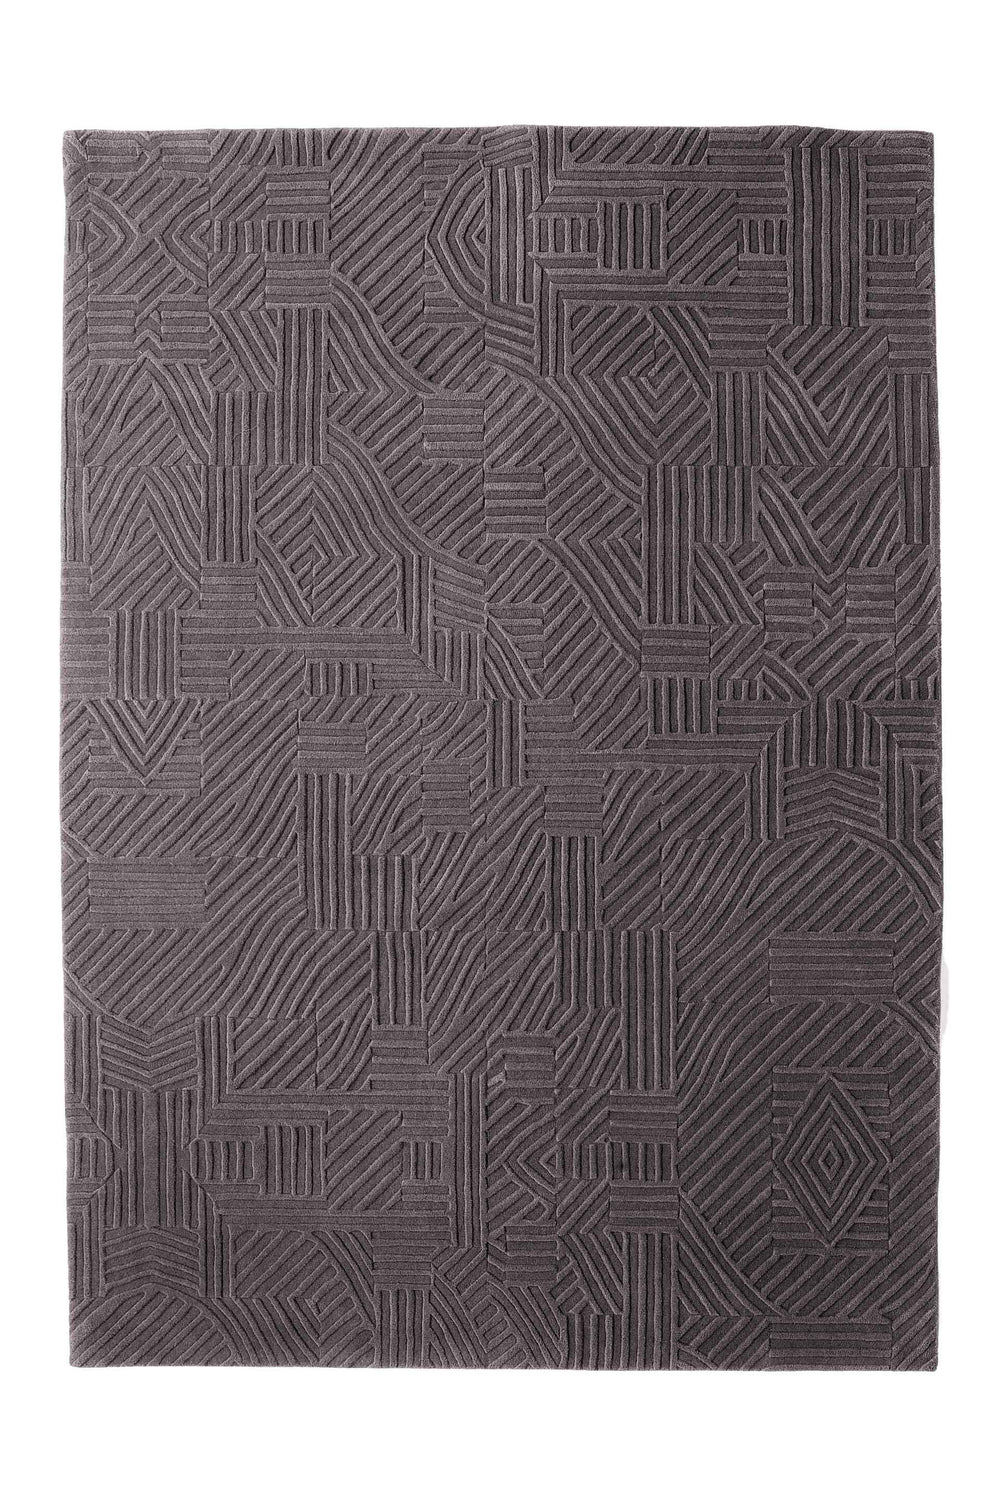 Milton Glaser African Pattern 1 Rug